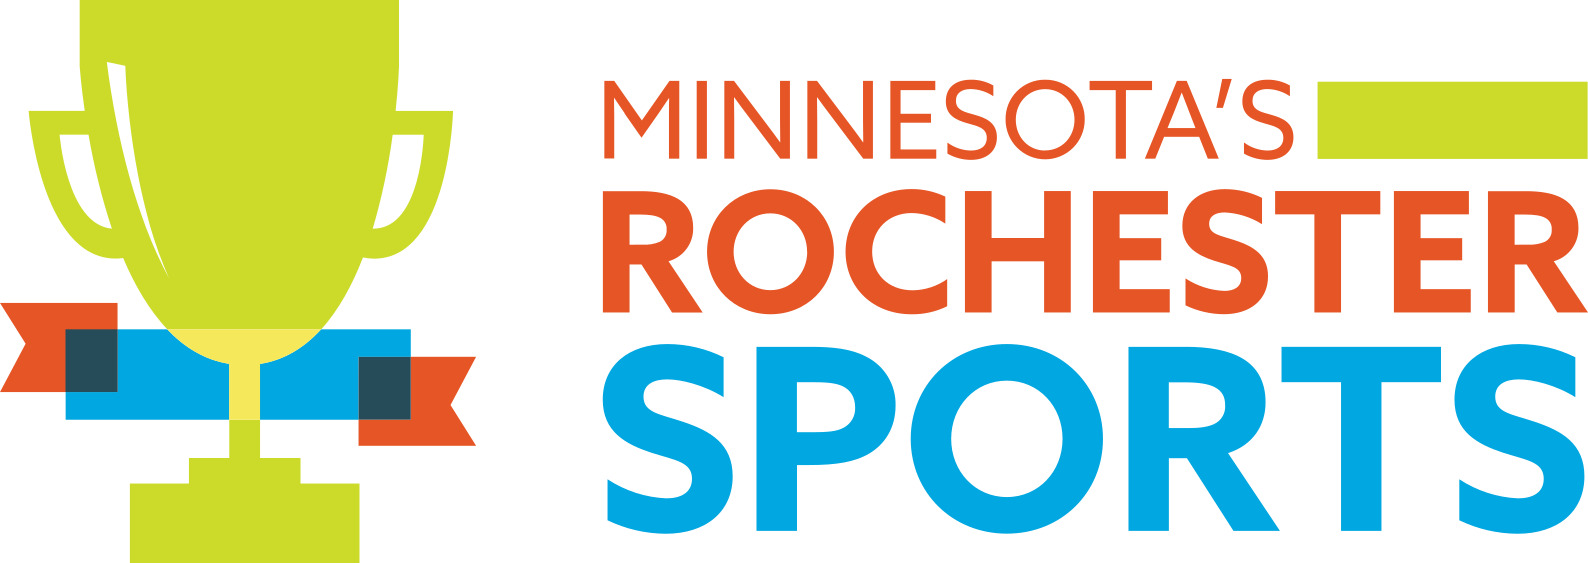 Minnesota's Rochester Sports